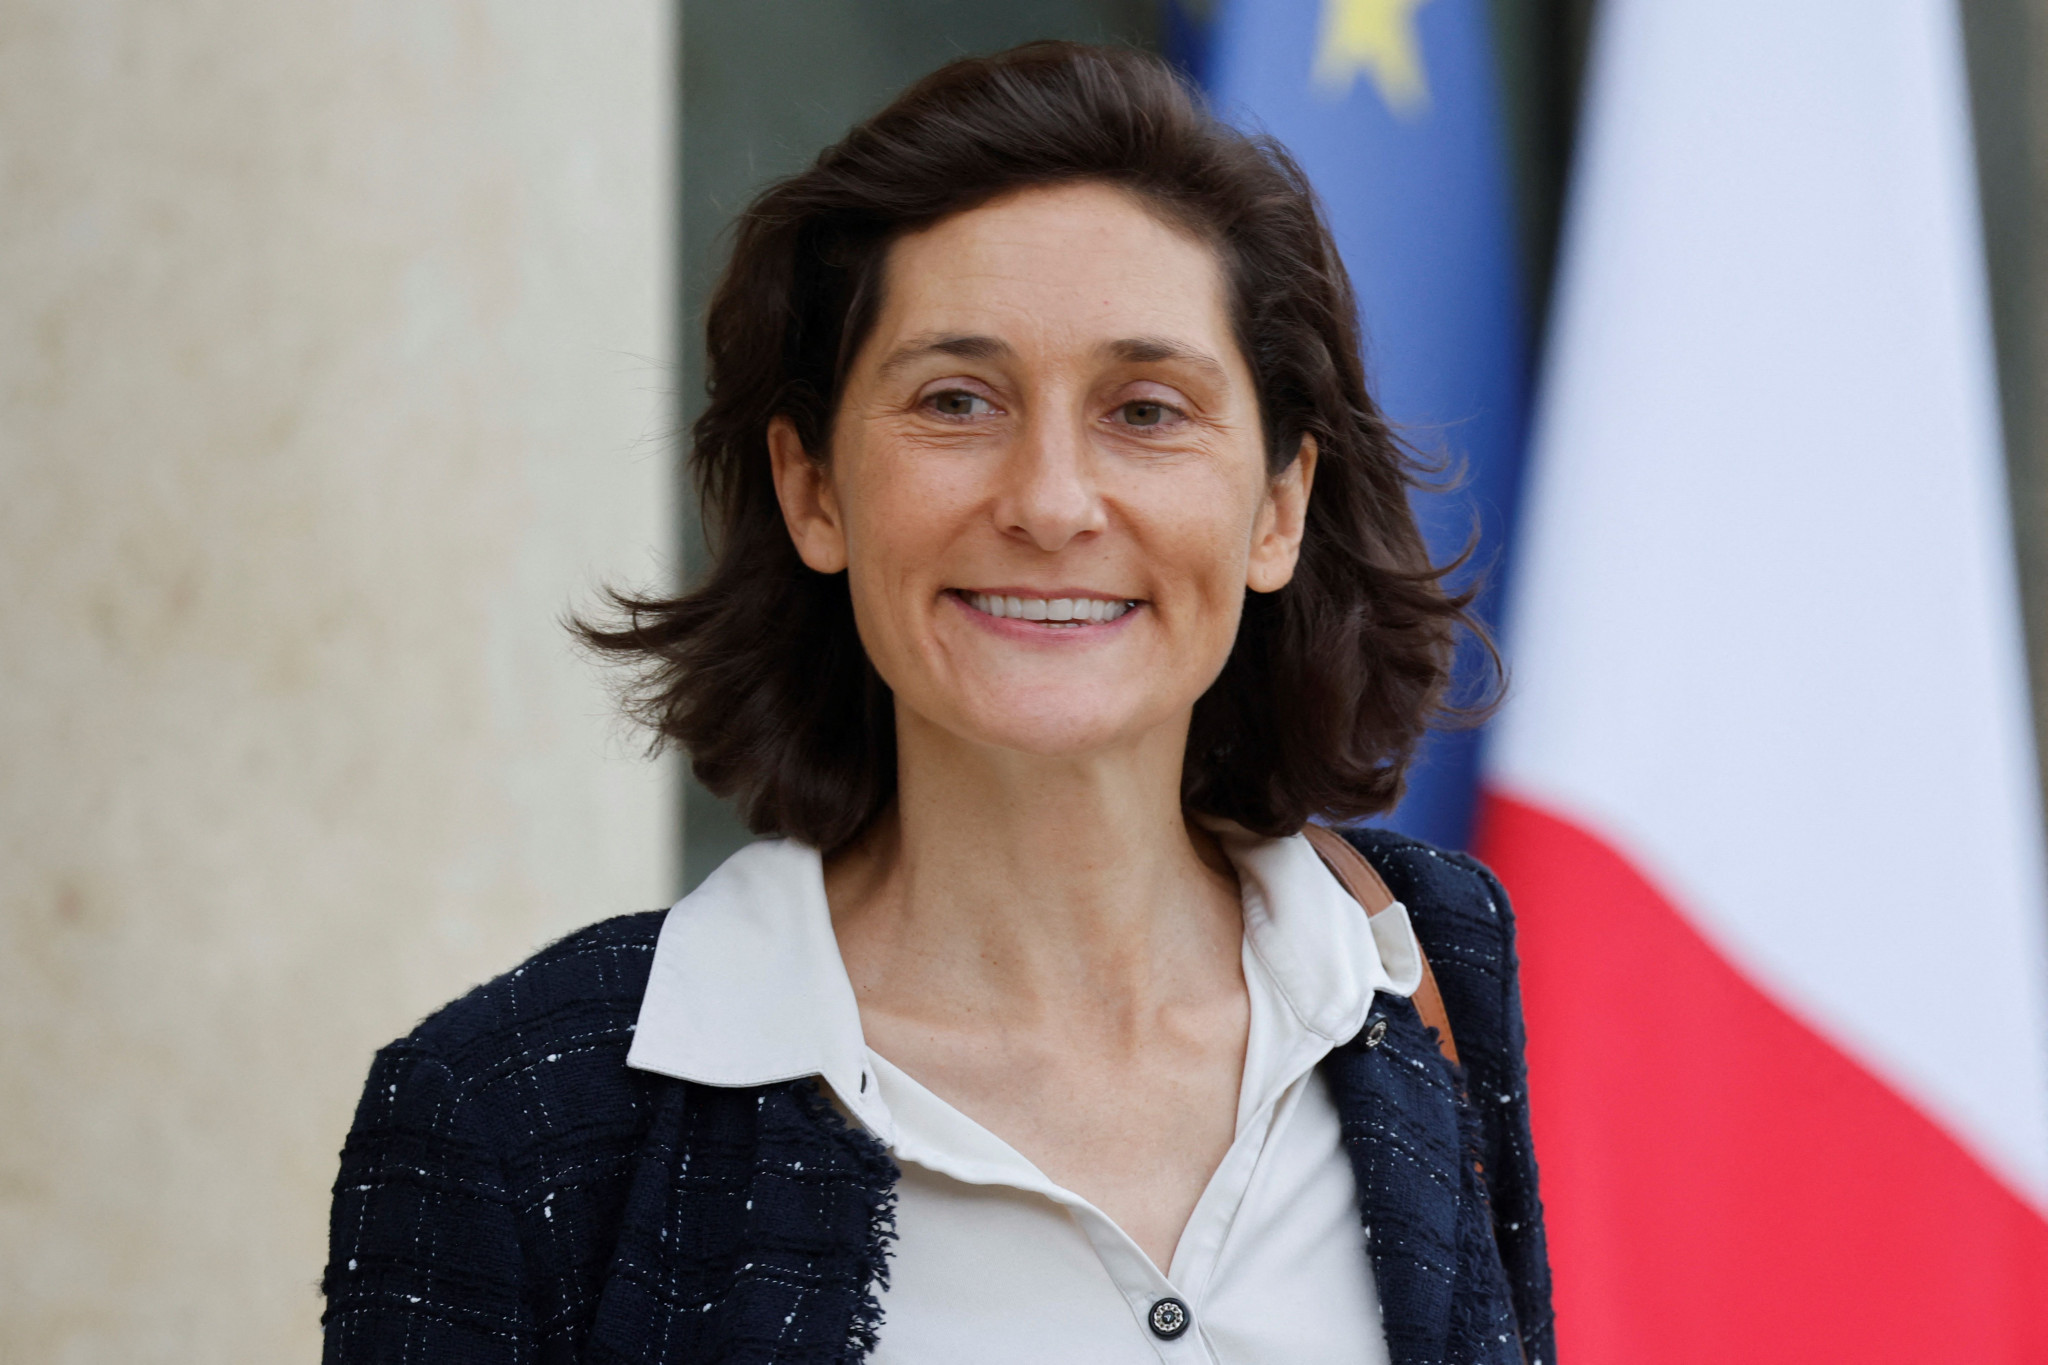 French Sports Minister Amélie Oudéa-Castéra said ANS President Michel Cadot was the 